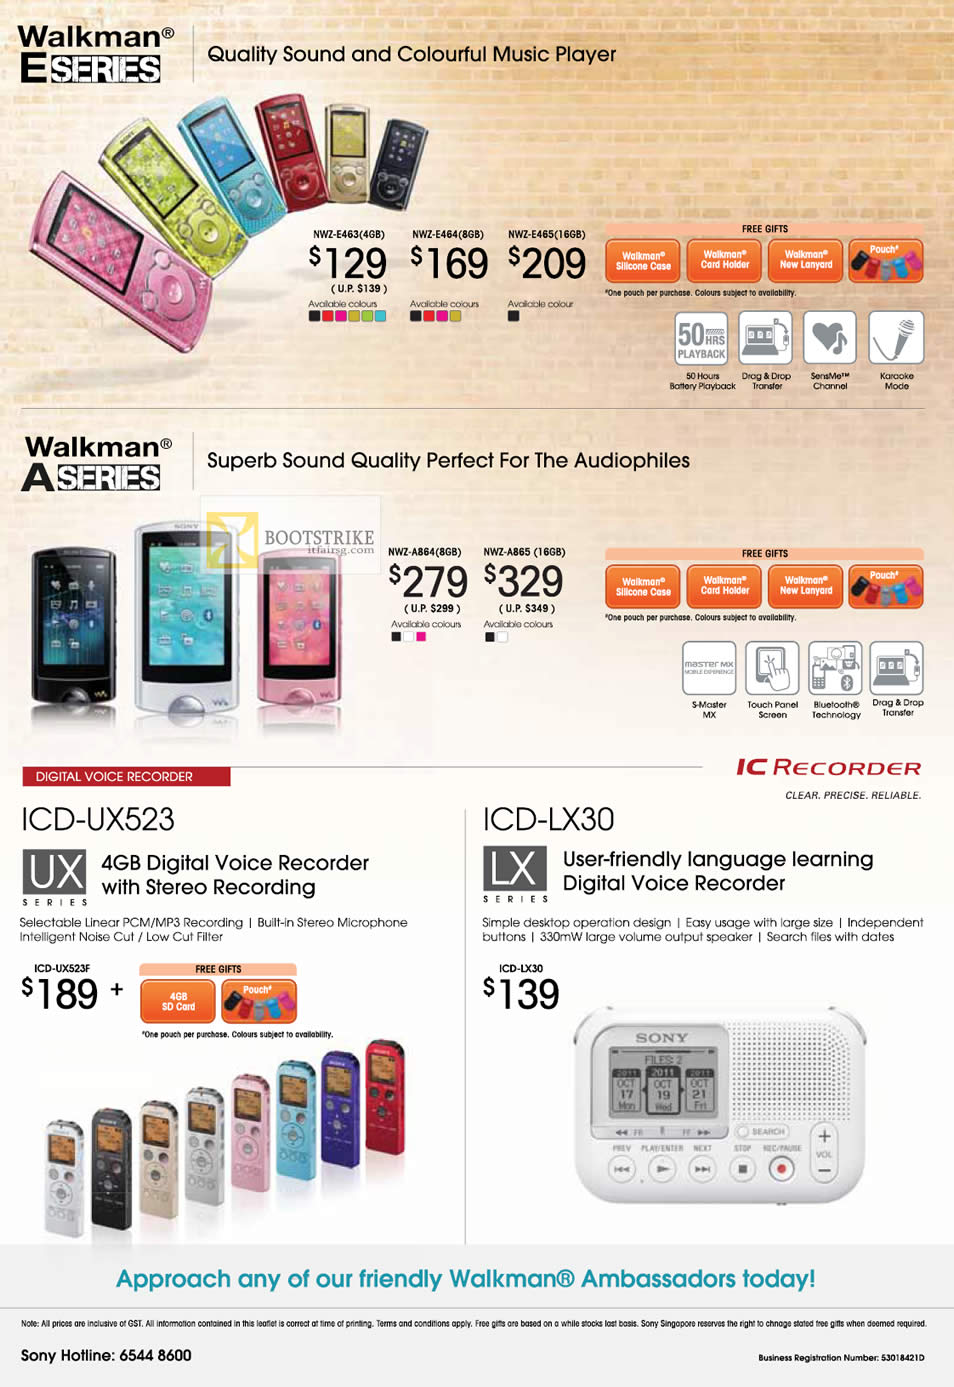 IT SHOW 2012 price list image brochure of Sony Walkman MP3 Player NWZ-E463, NWZ-E464, NWZ-E465, NWZ-A864, NWZ-A865, Digital Voice Recorder ICD-UX523, ICD-LX30